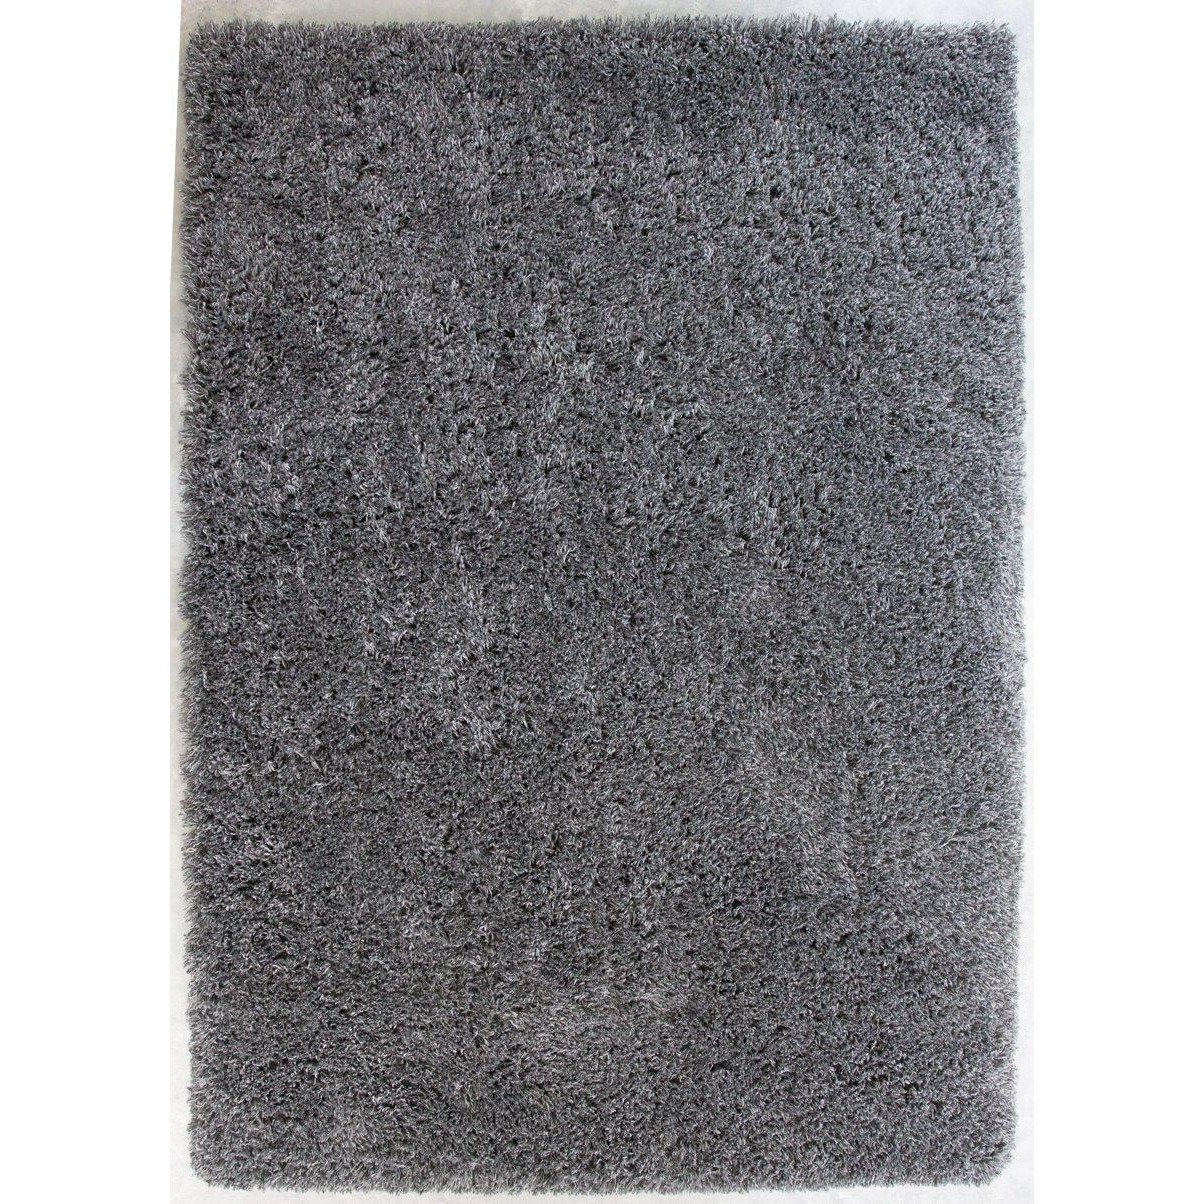 Soft Fluffy Thick Pile Shaggy Area Rug, Living Room Bedroom Carpet Runner - image 1